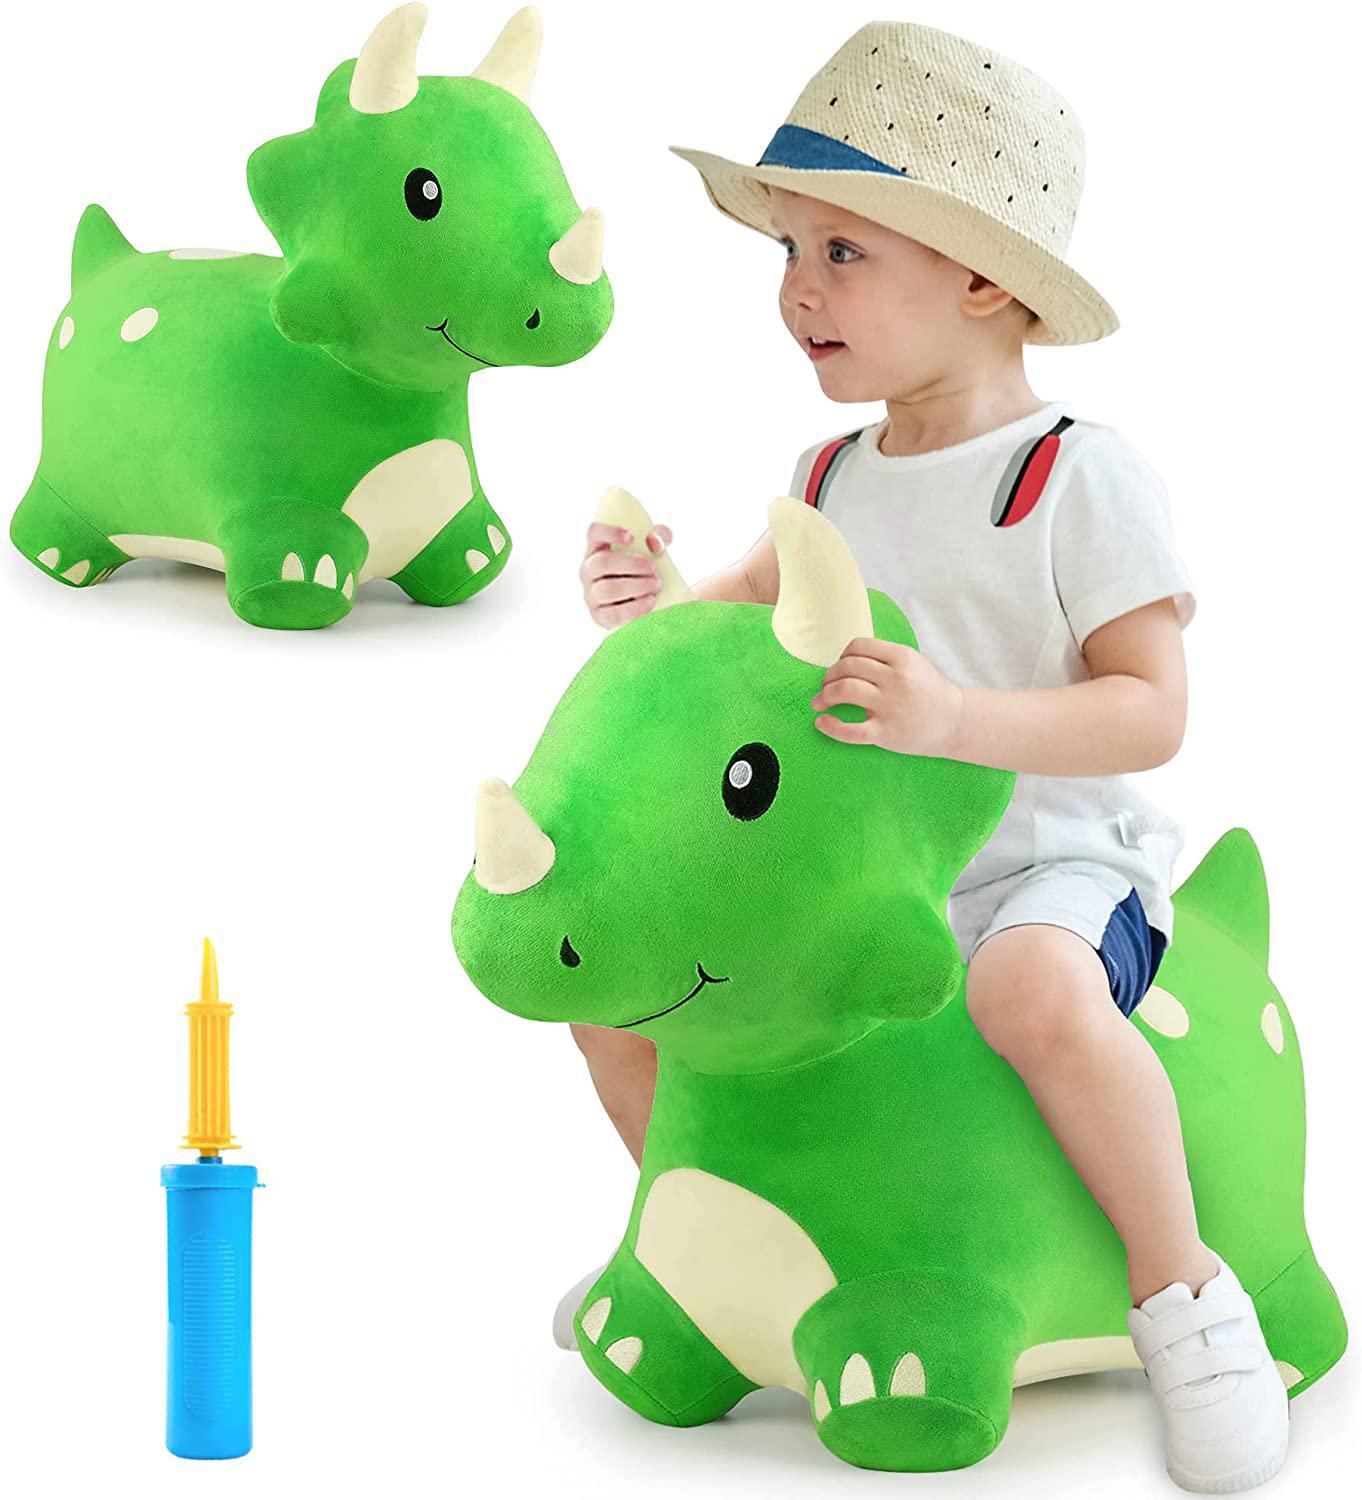 Bouncy Ride On Triceratops Dinosaur